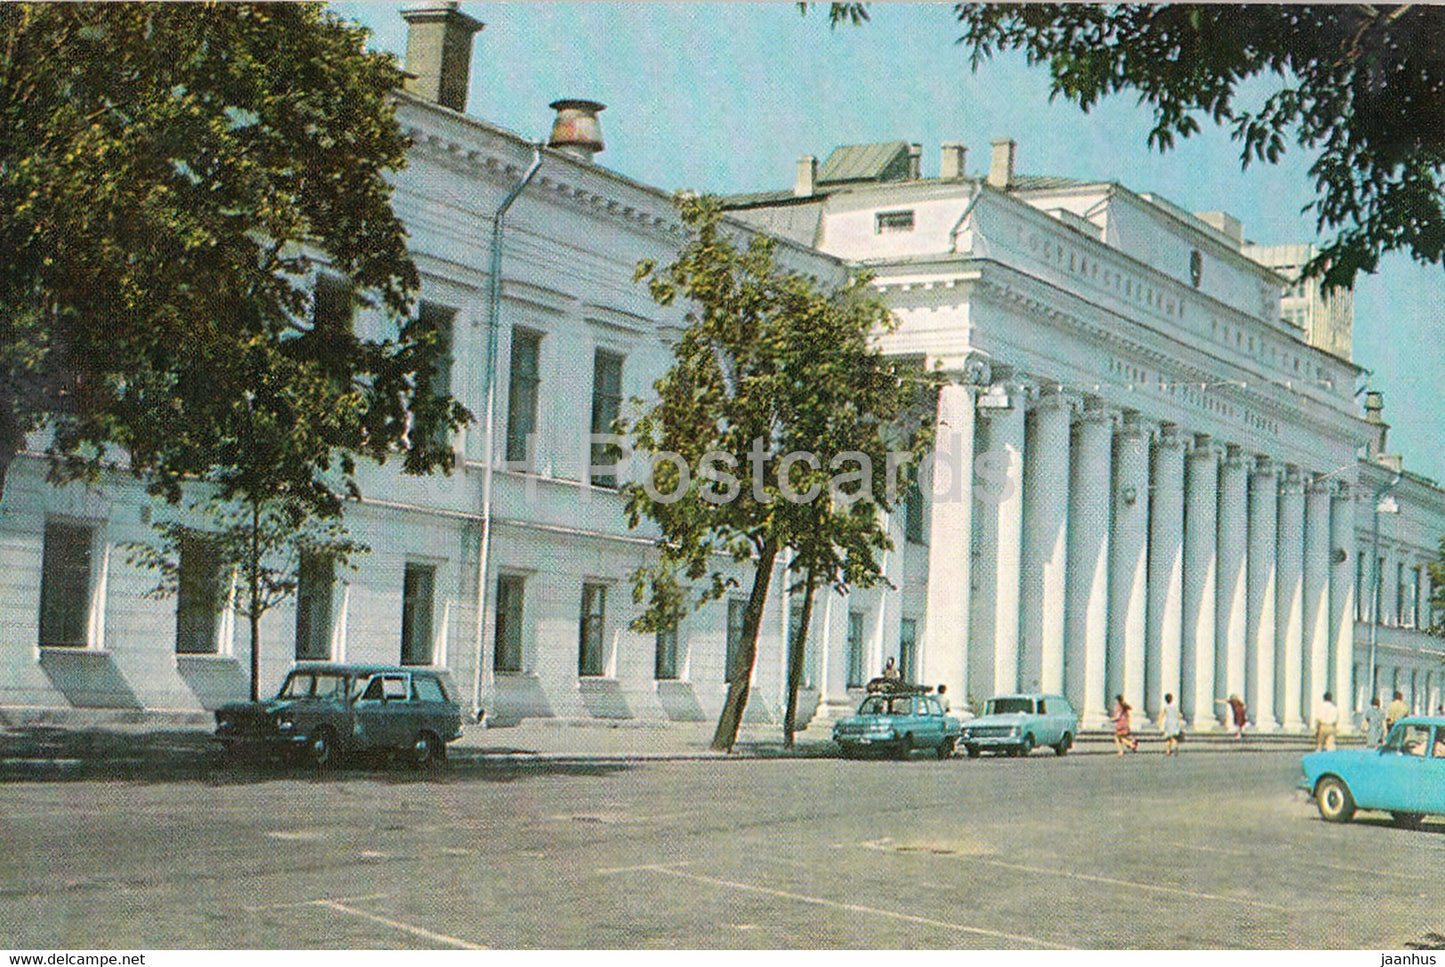 Kazan - Ulyanov Lenin State University - car - 1976 - Russia USSR - unused - JH Postcards